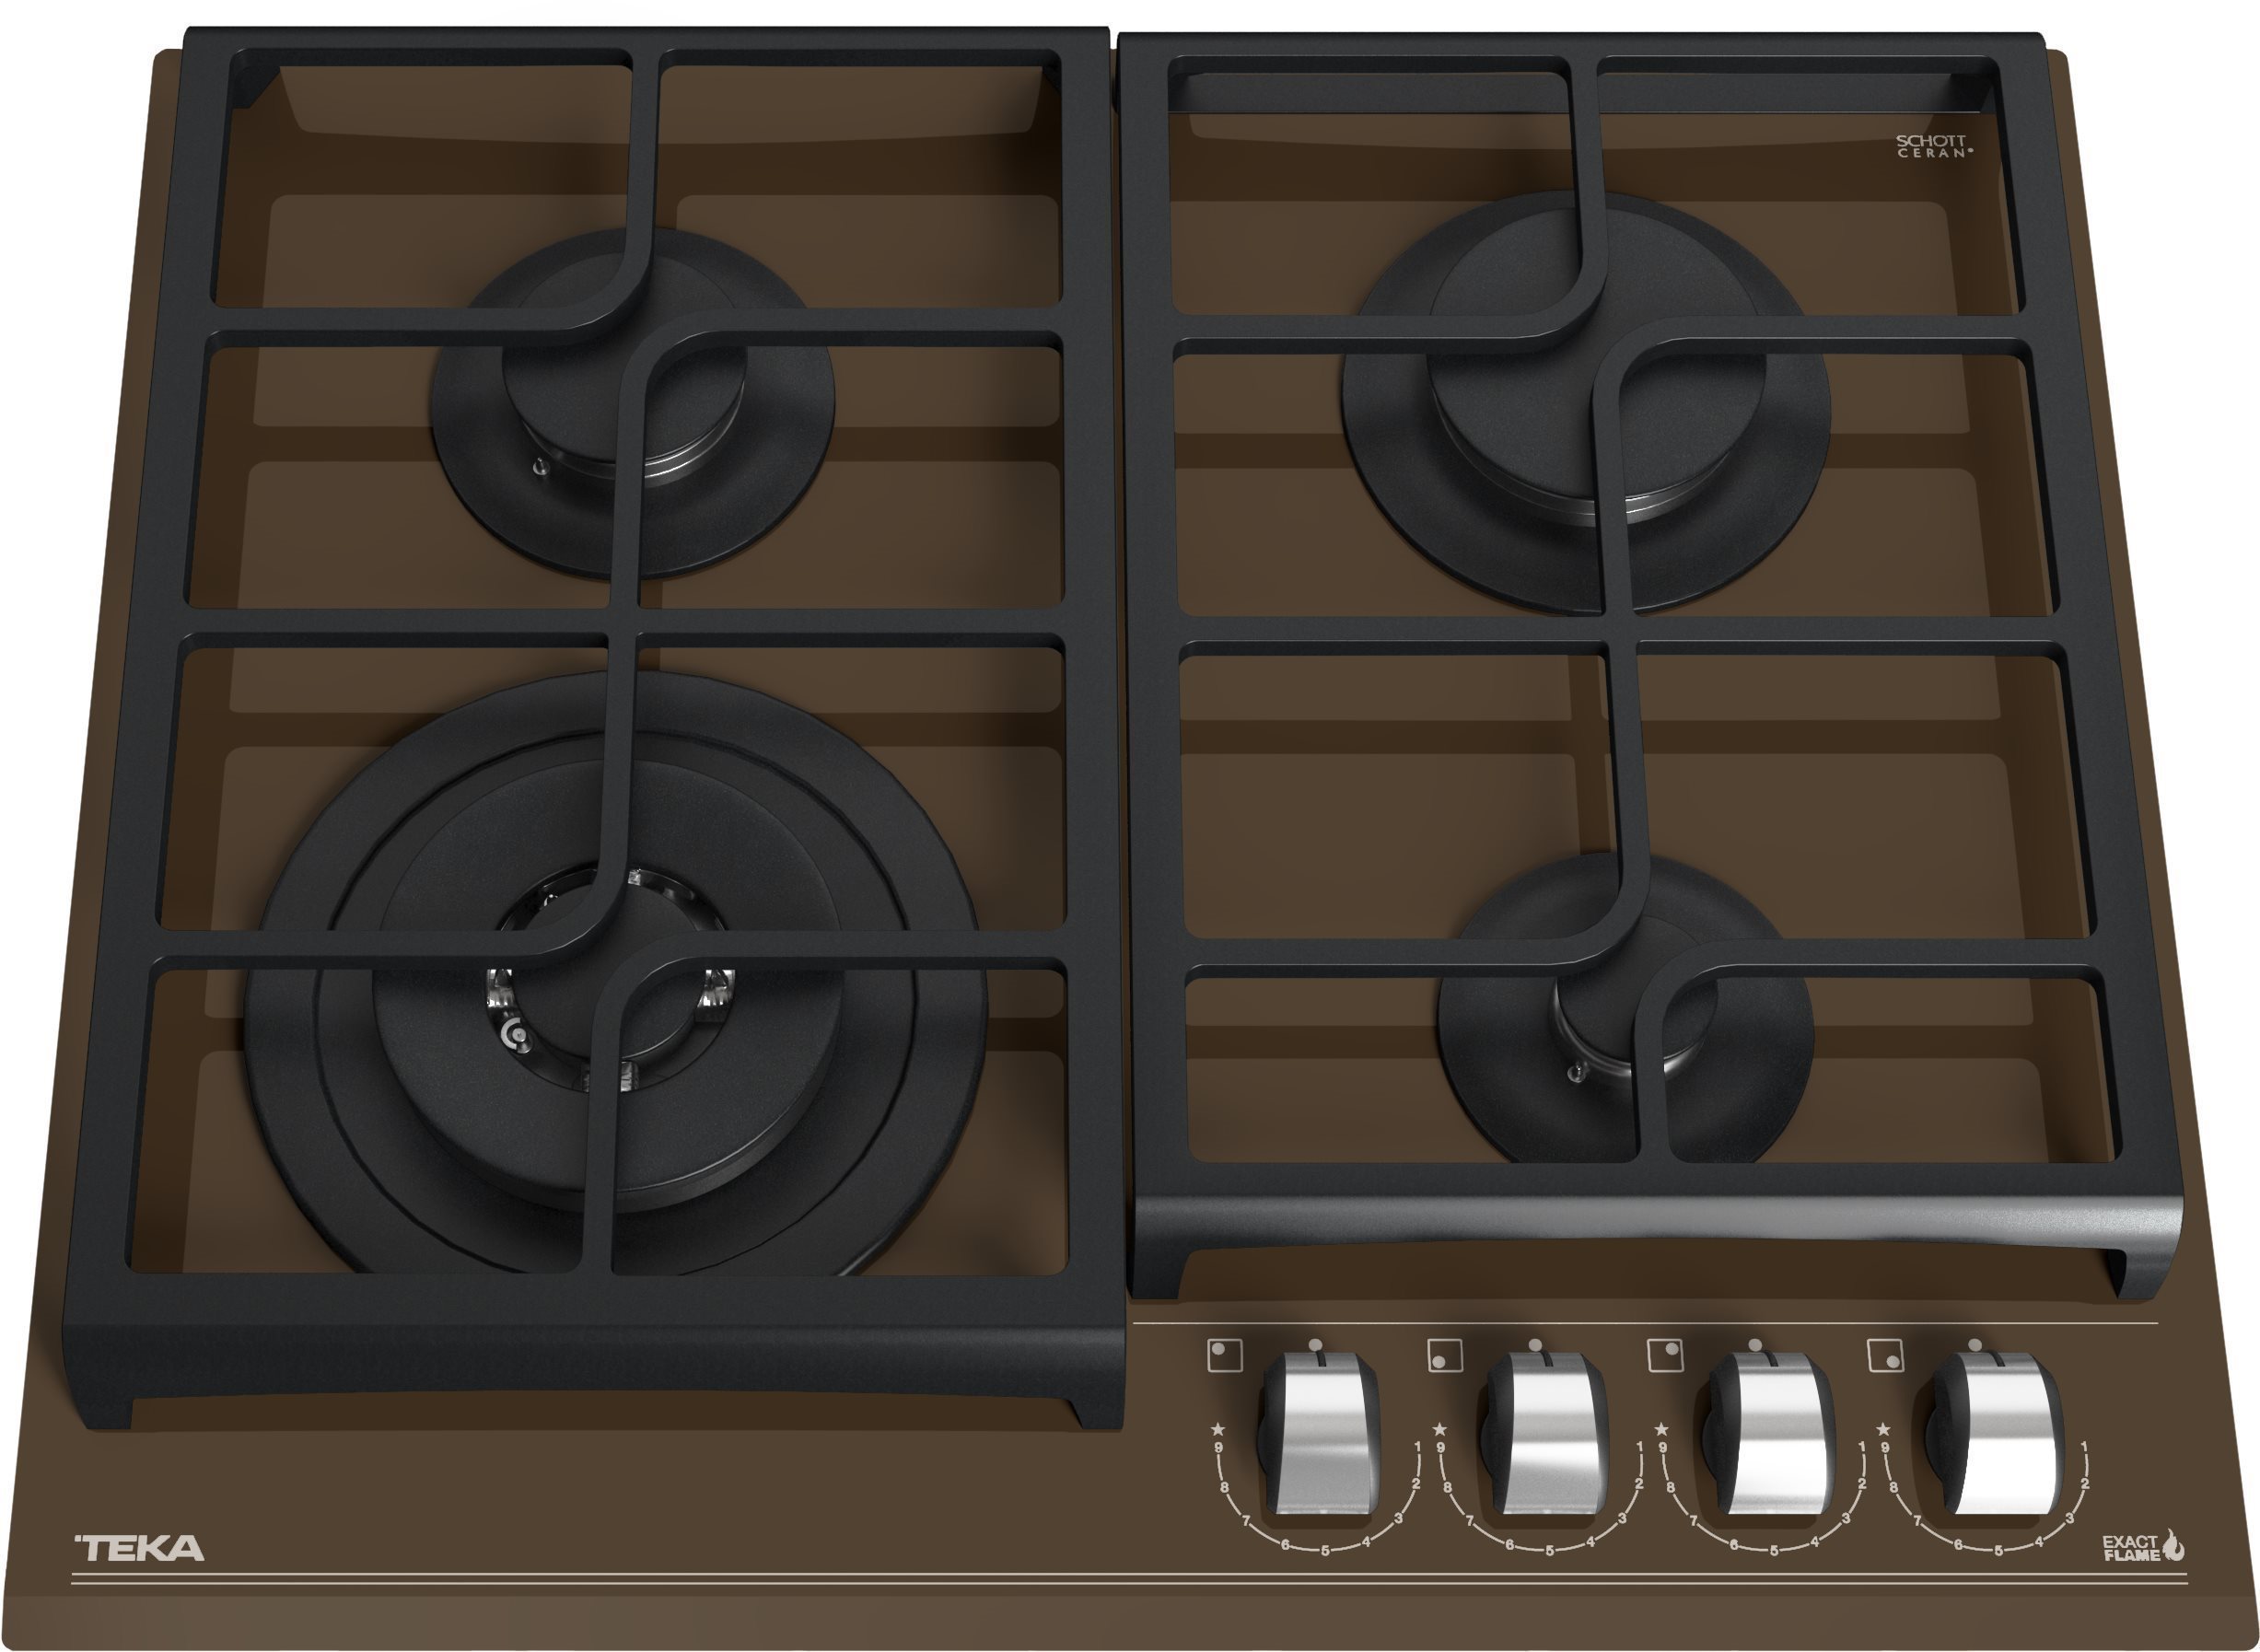 Oven & Cooktop Set TEKA HLB 8600 U-Brick Brown + TEKA GZC 64630 U-BRICK BROWN Lifestyle